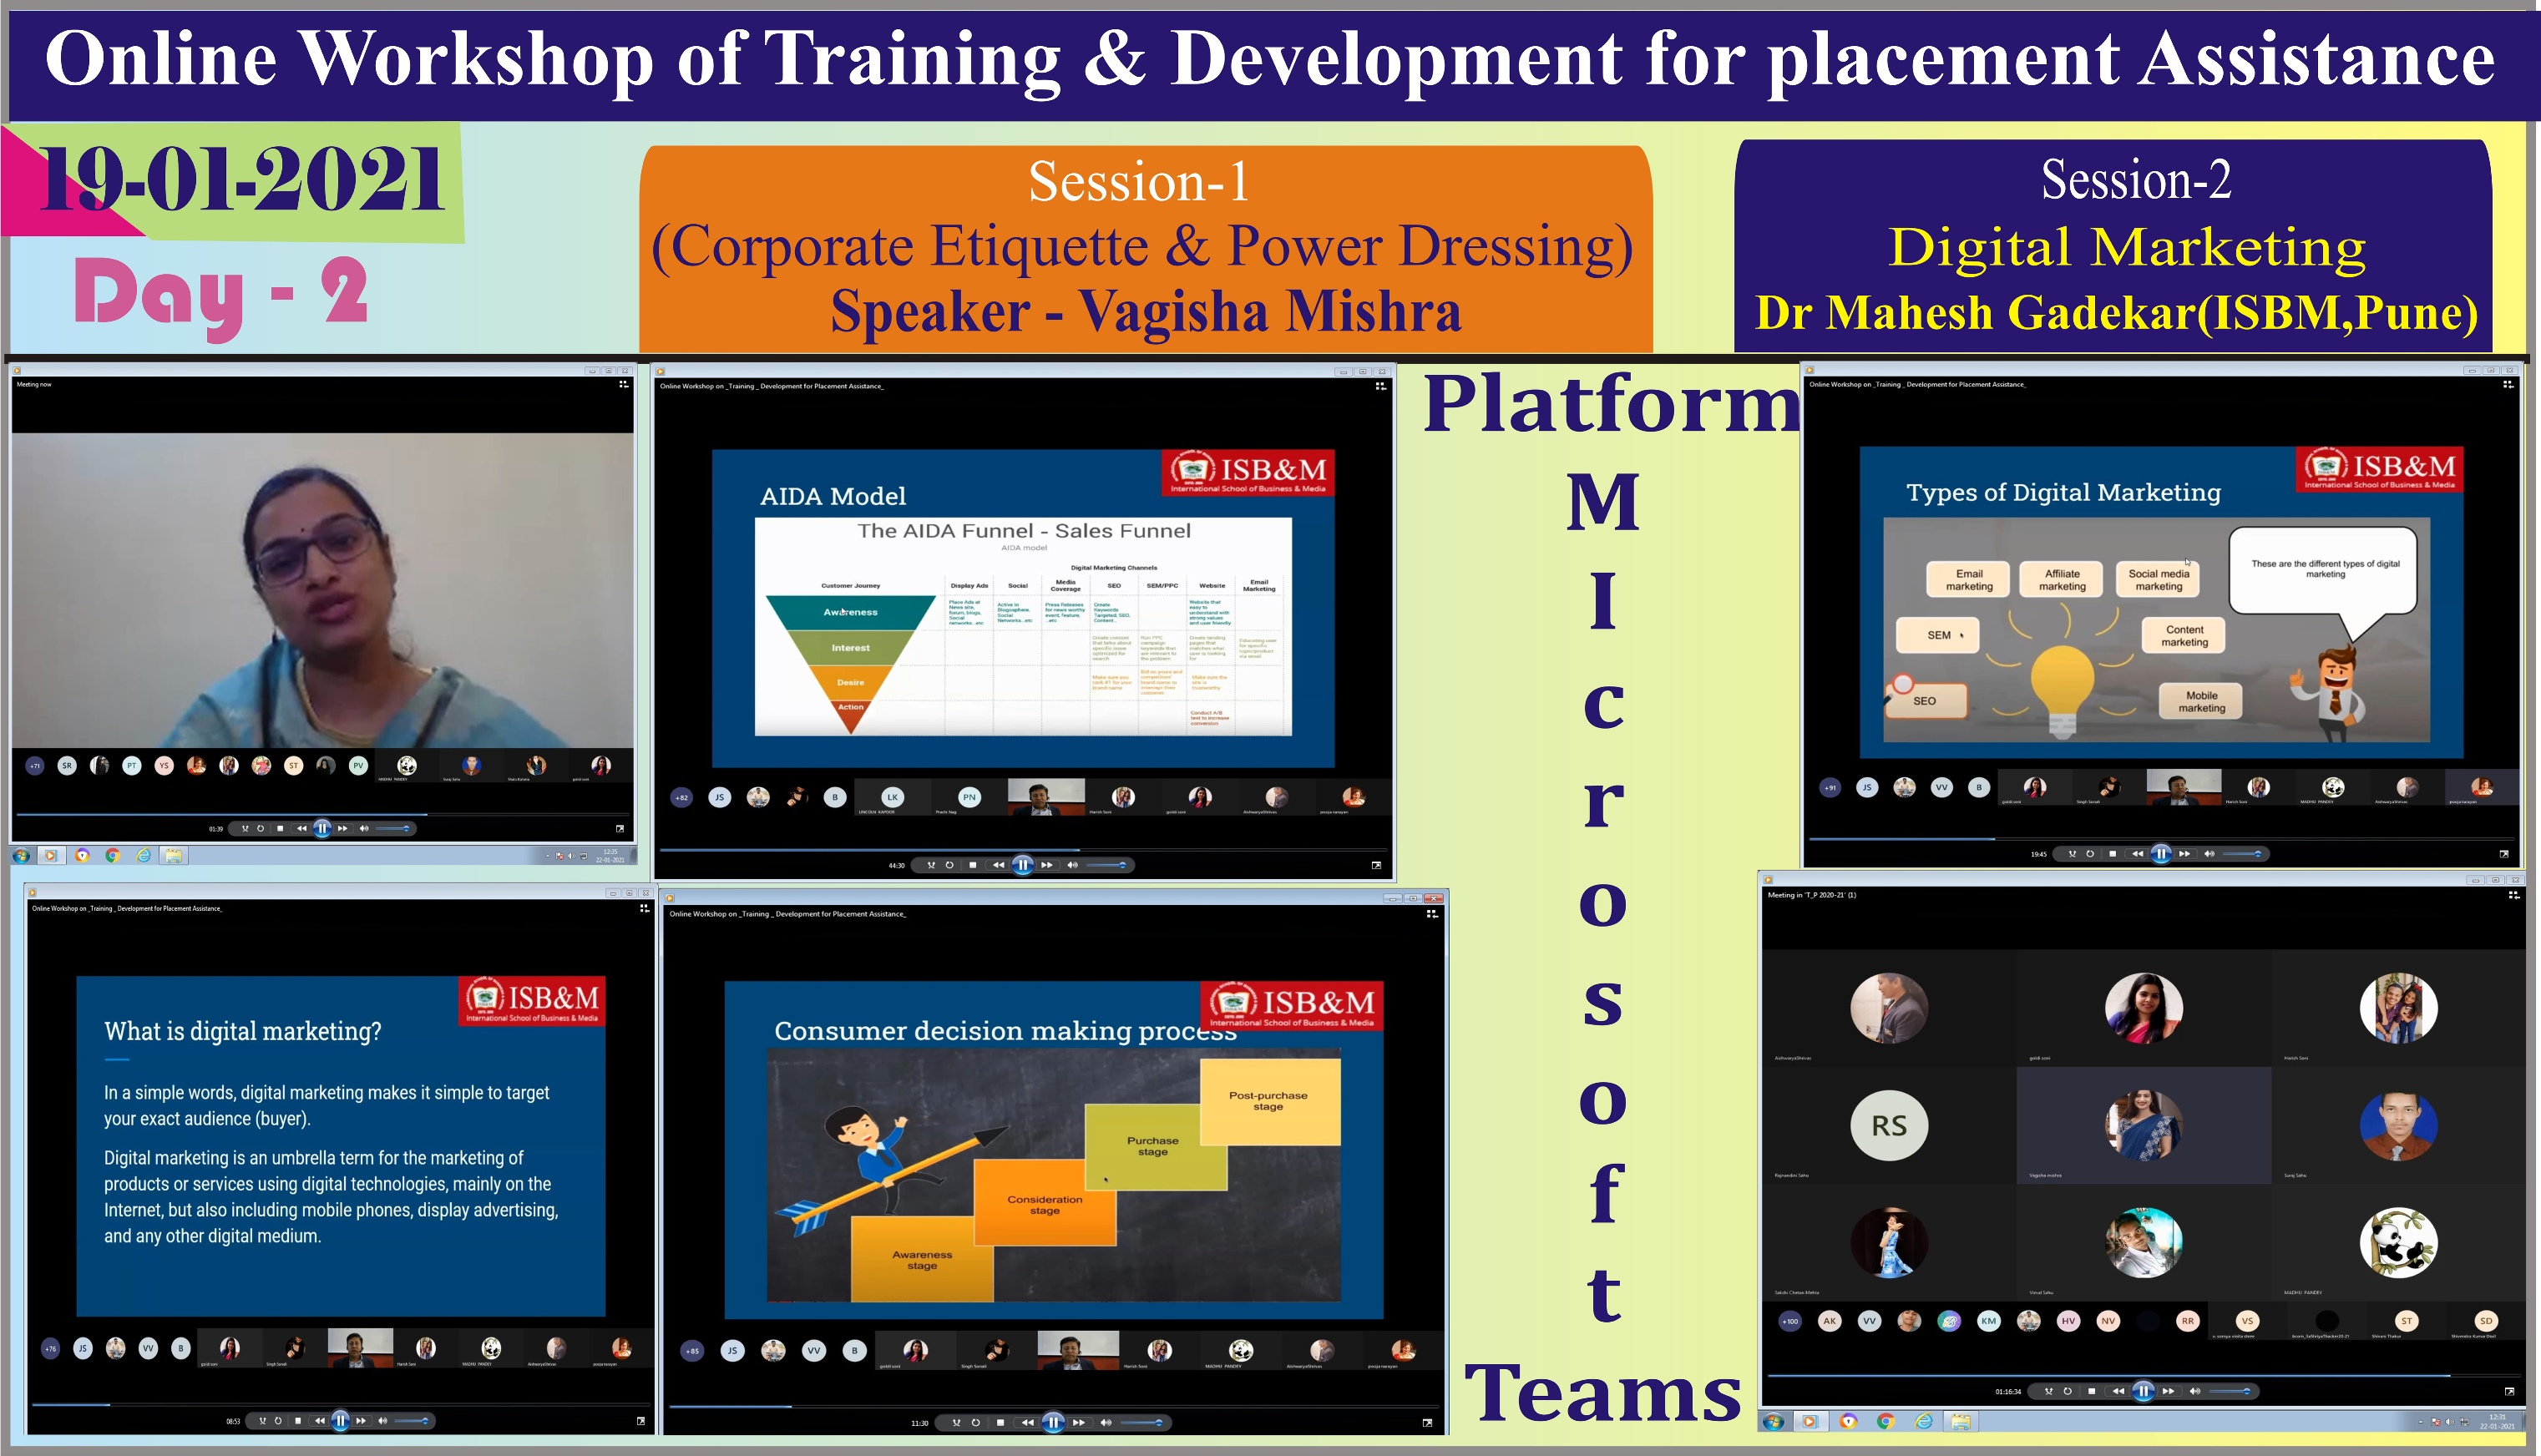 Online Workshop of Training & Development for Placement Assistance Program Day-2